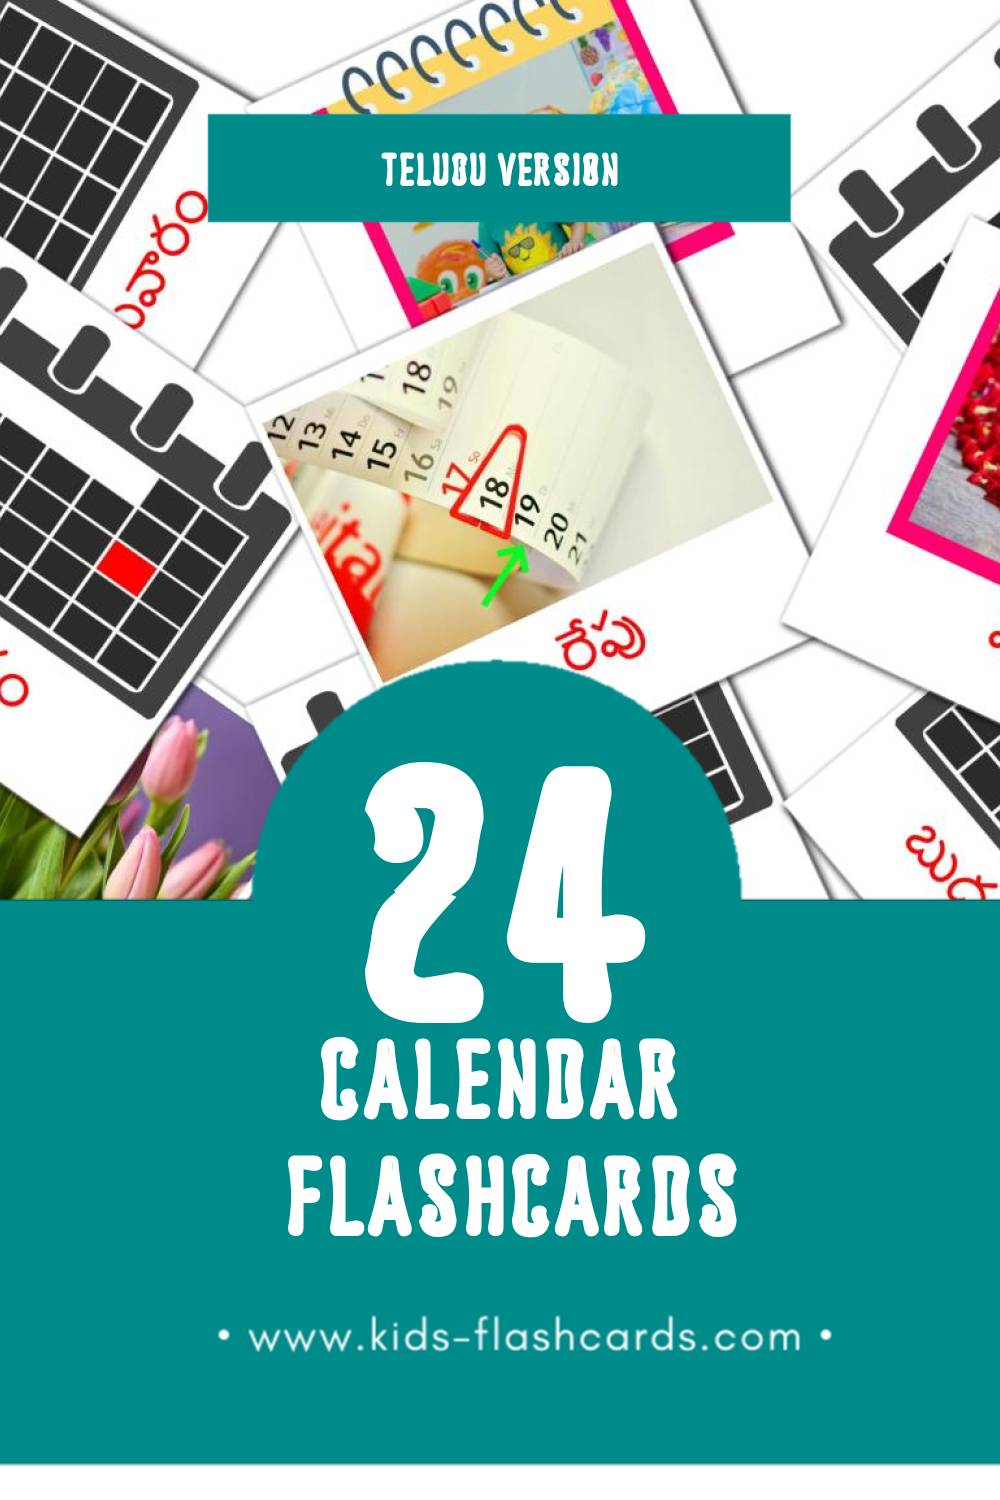 Visual క్యాలెండర్ Flashcards for Toddlers (24 cards in Telugu)